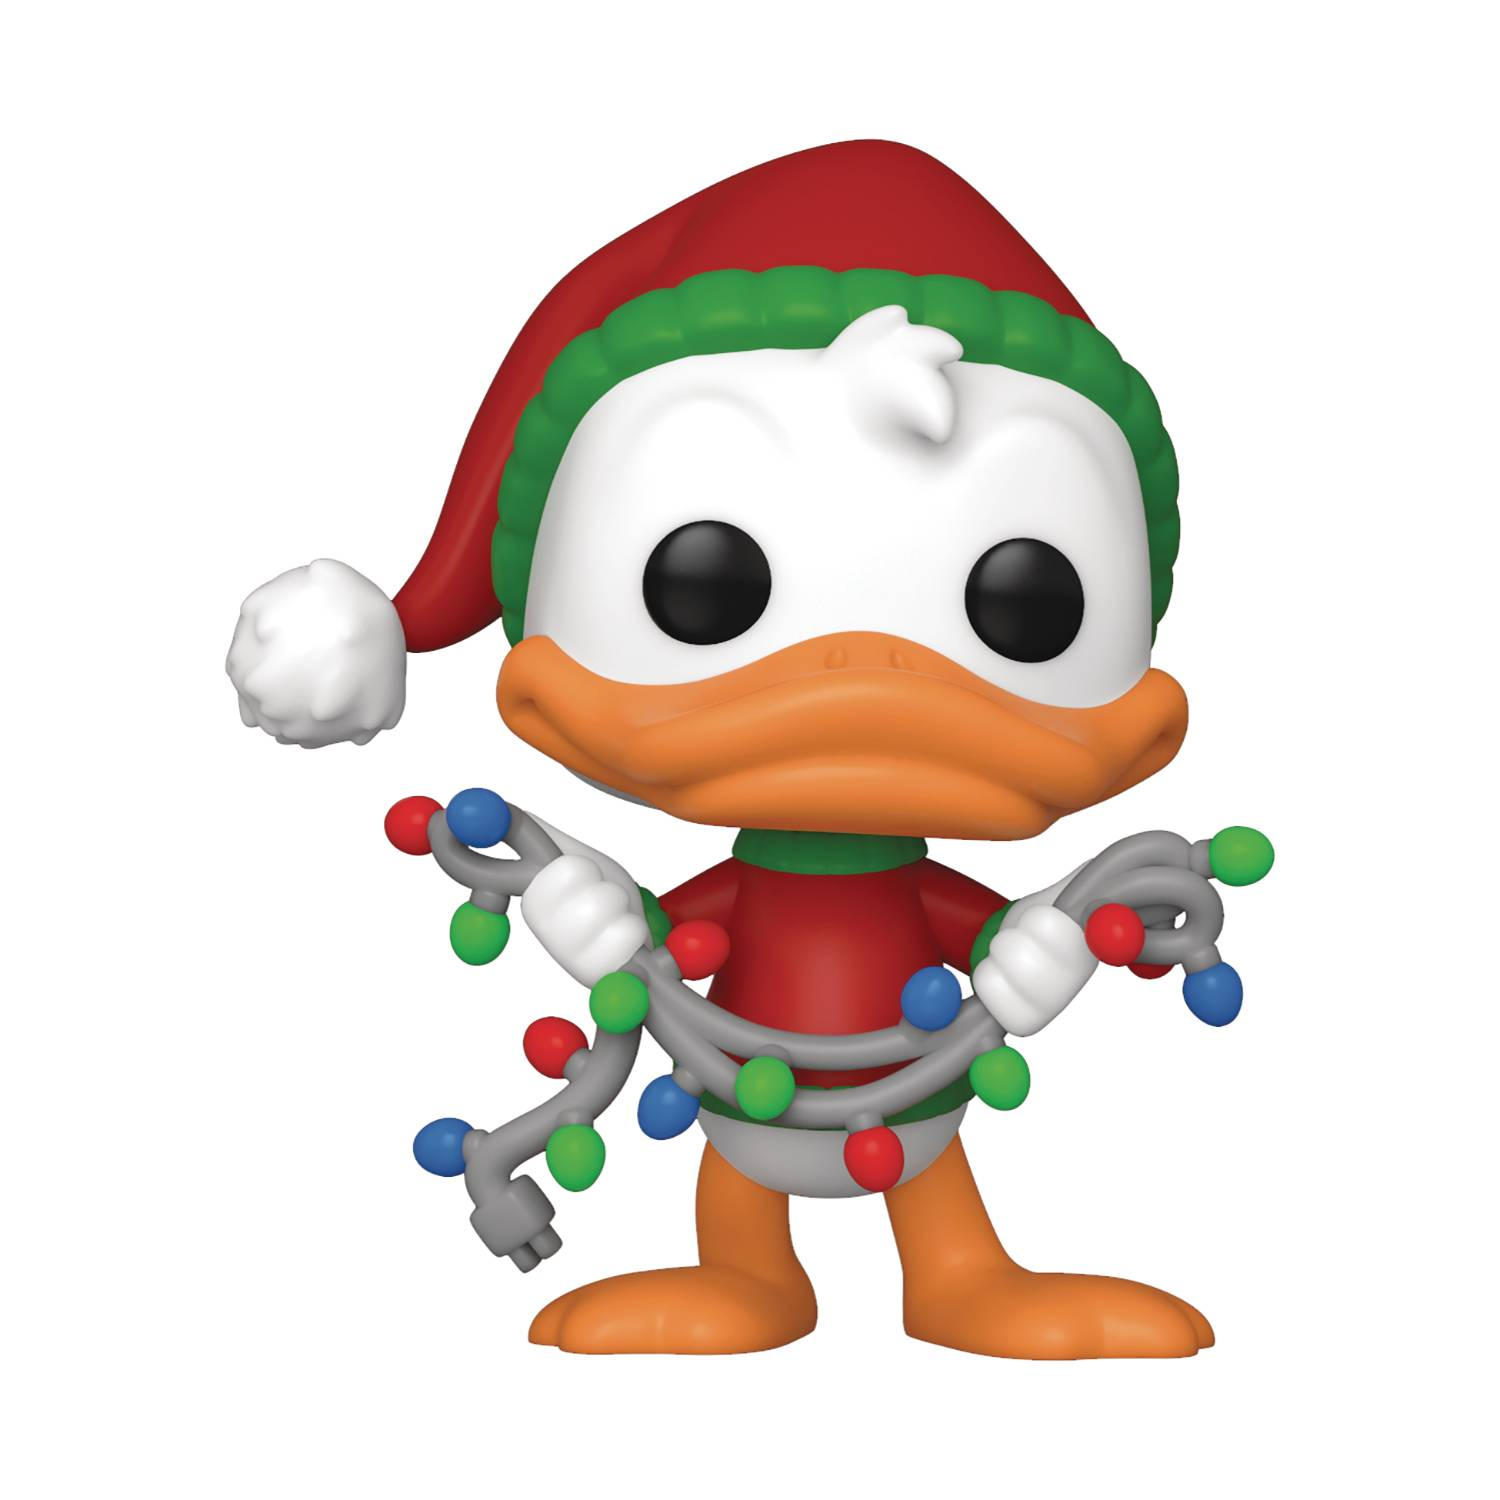 Pop! Disney Holiday 2021 - Donald Duck